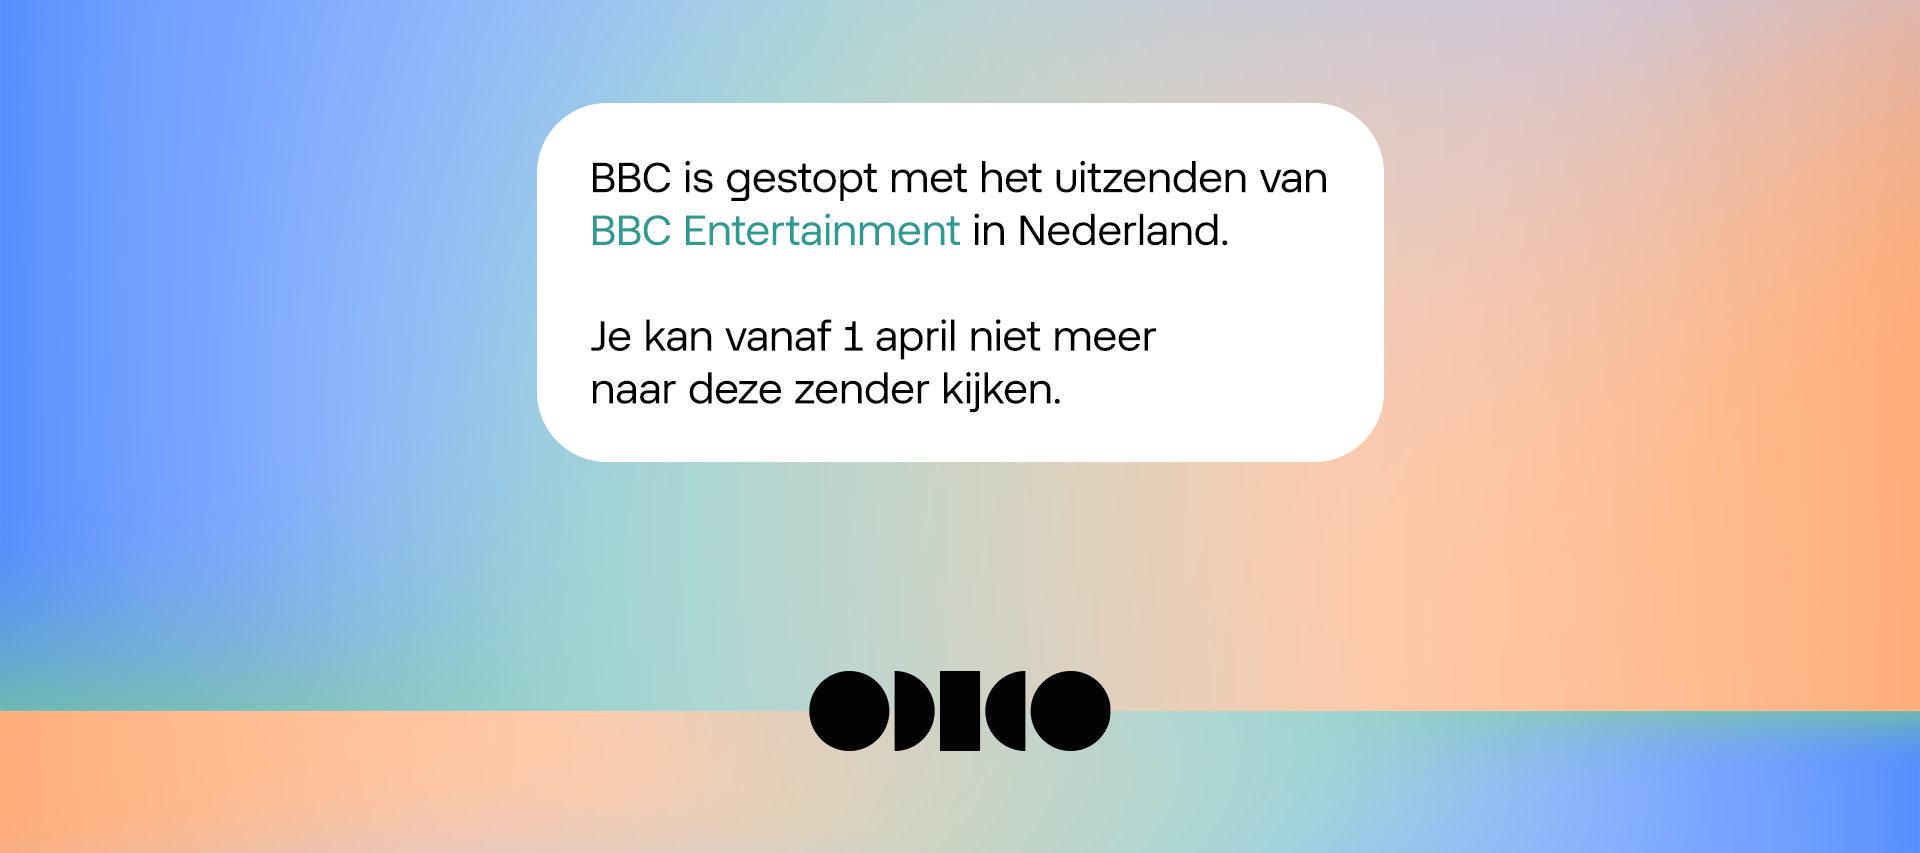 BBC Entertainment stopt in Nederland